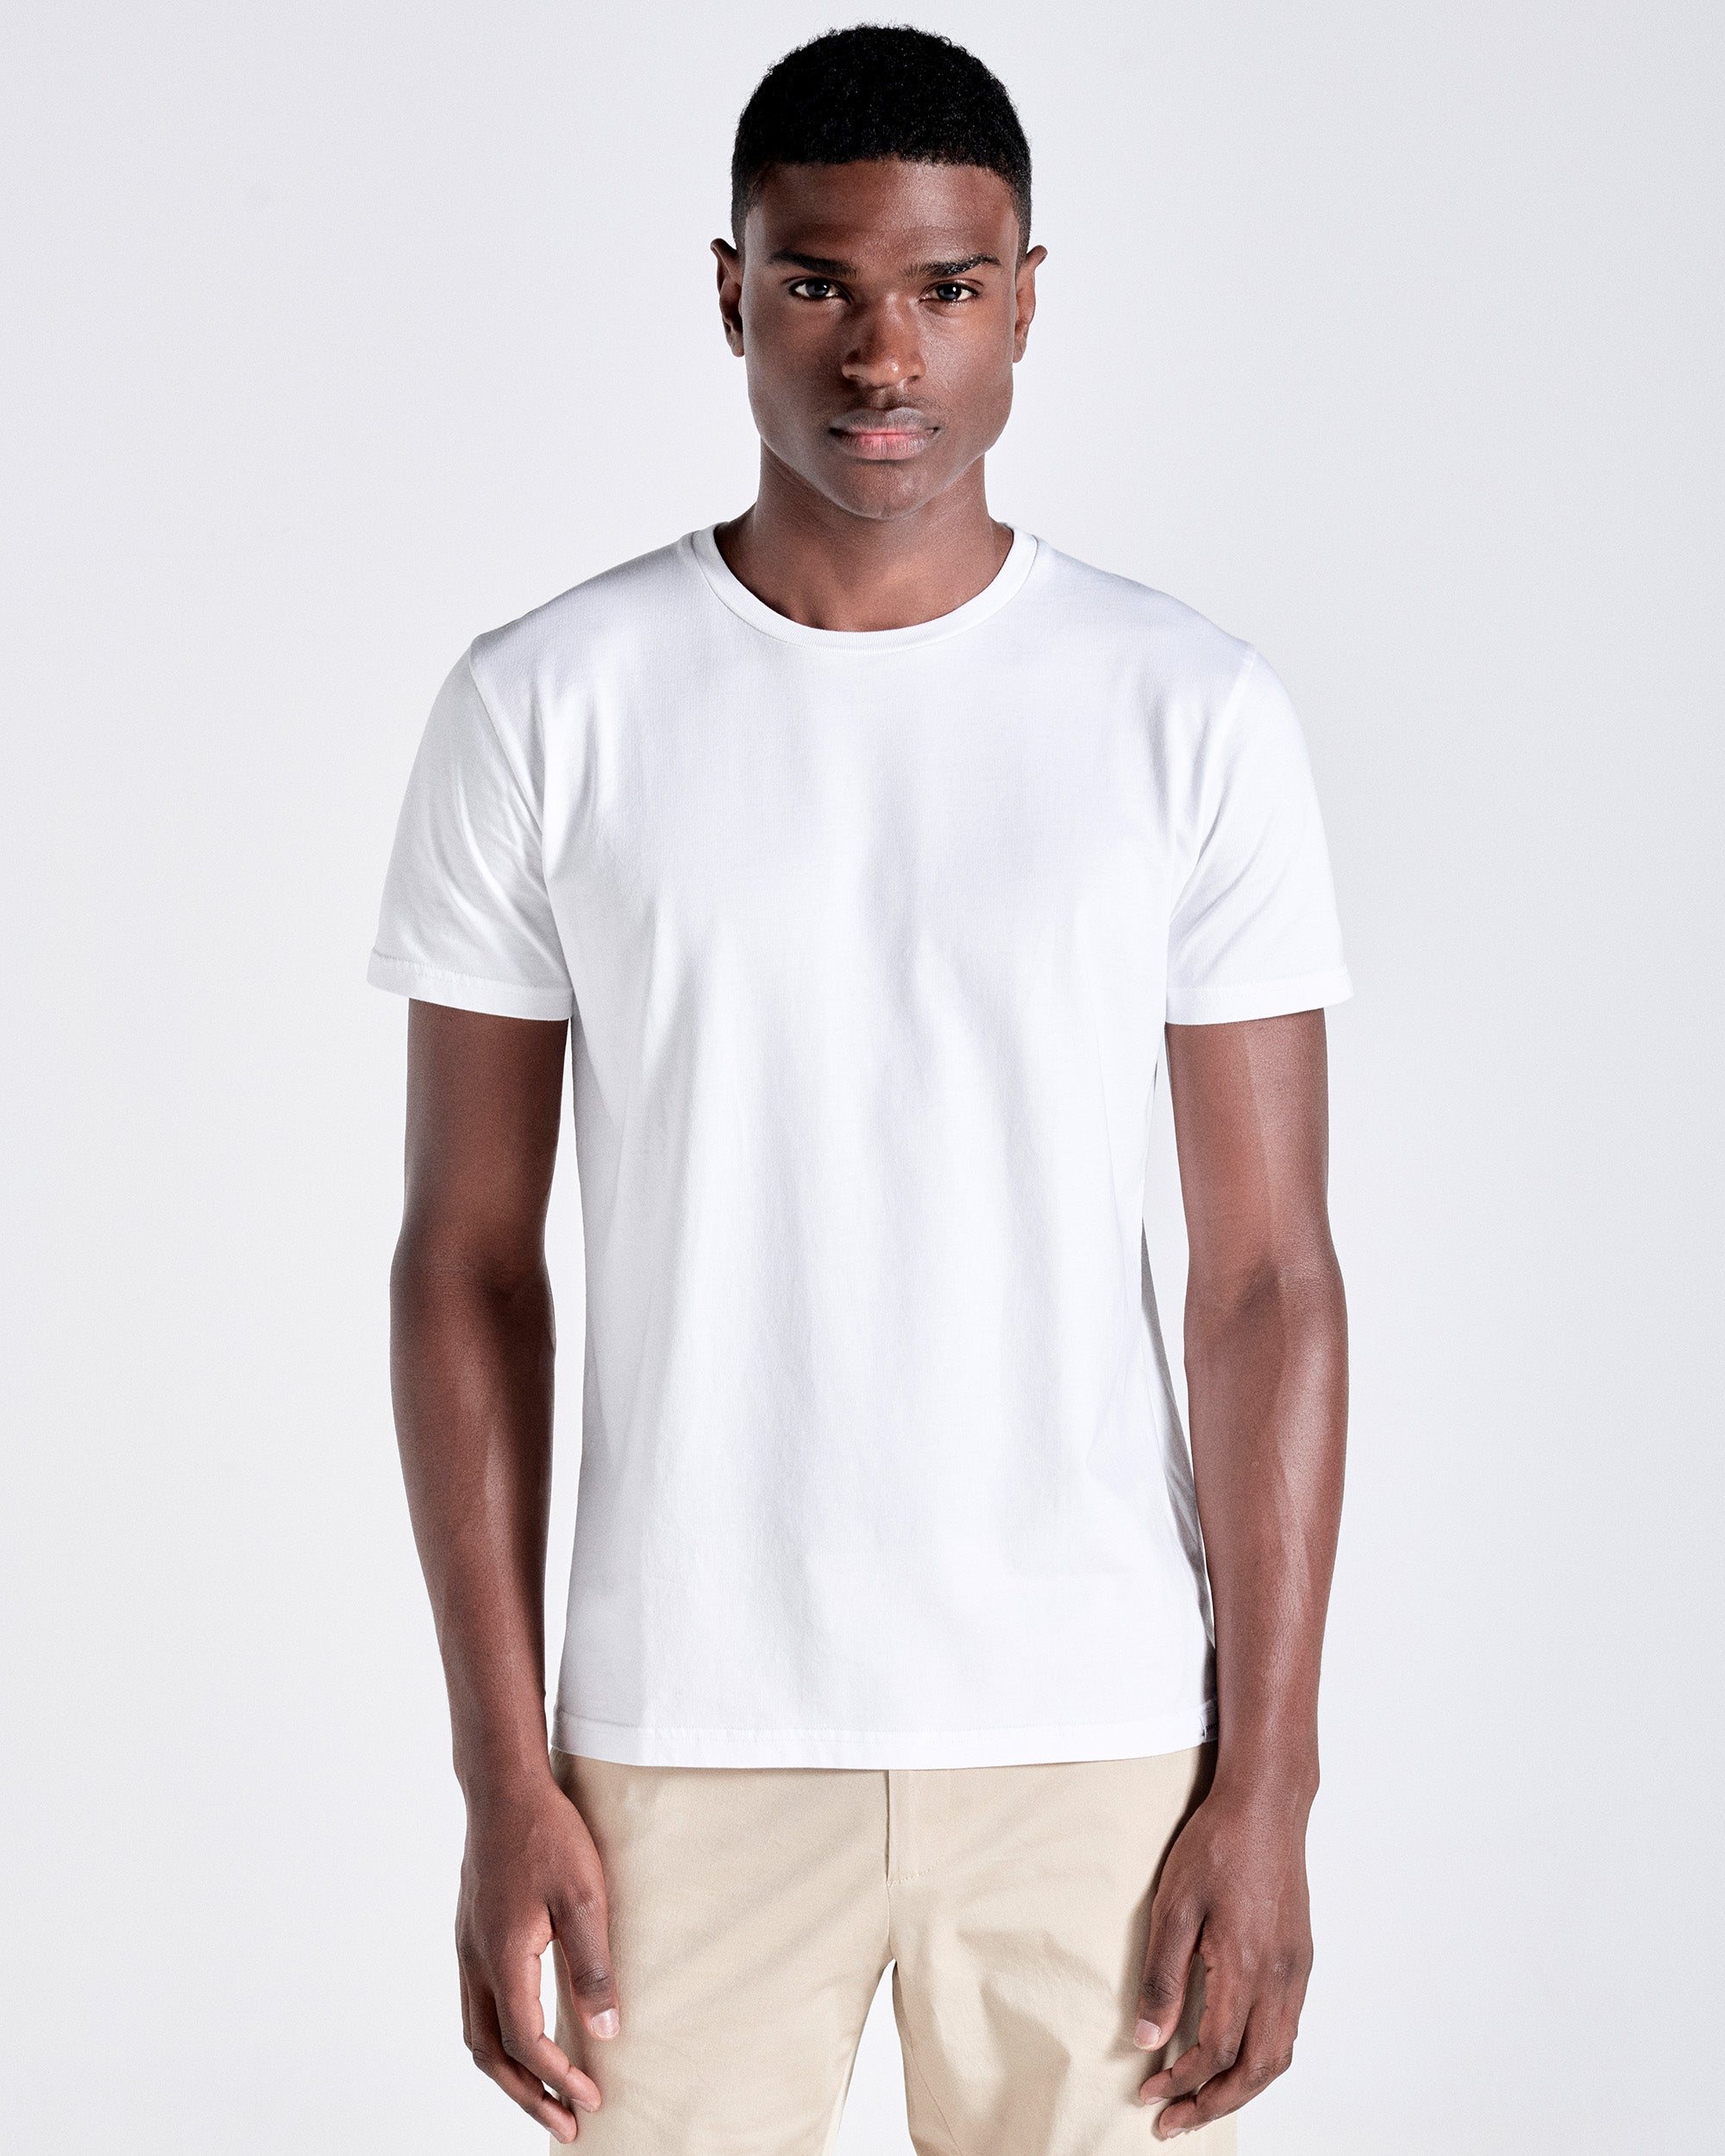 The Perfect White T-Shirt for Men | Premium 185GSM Cotton